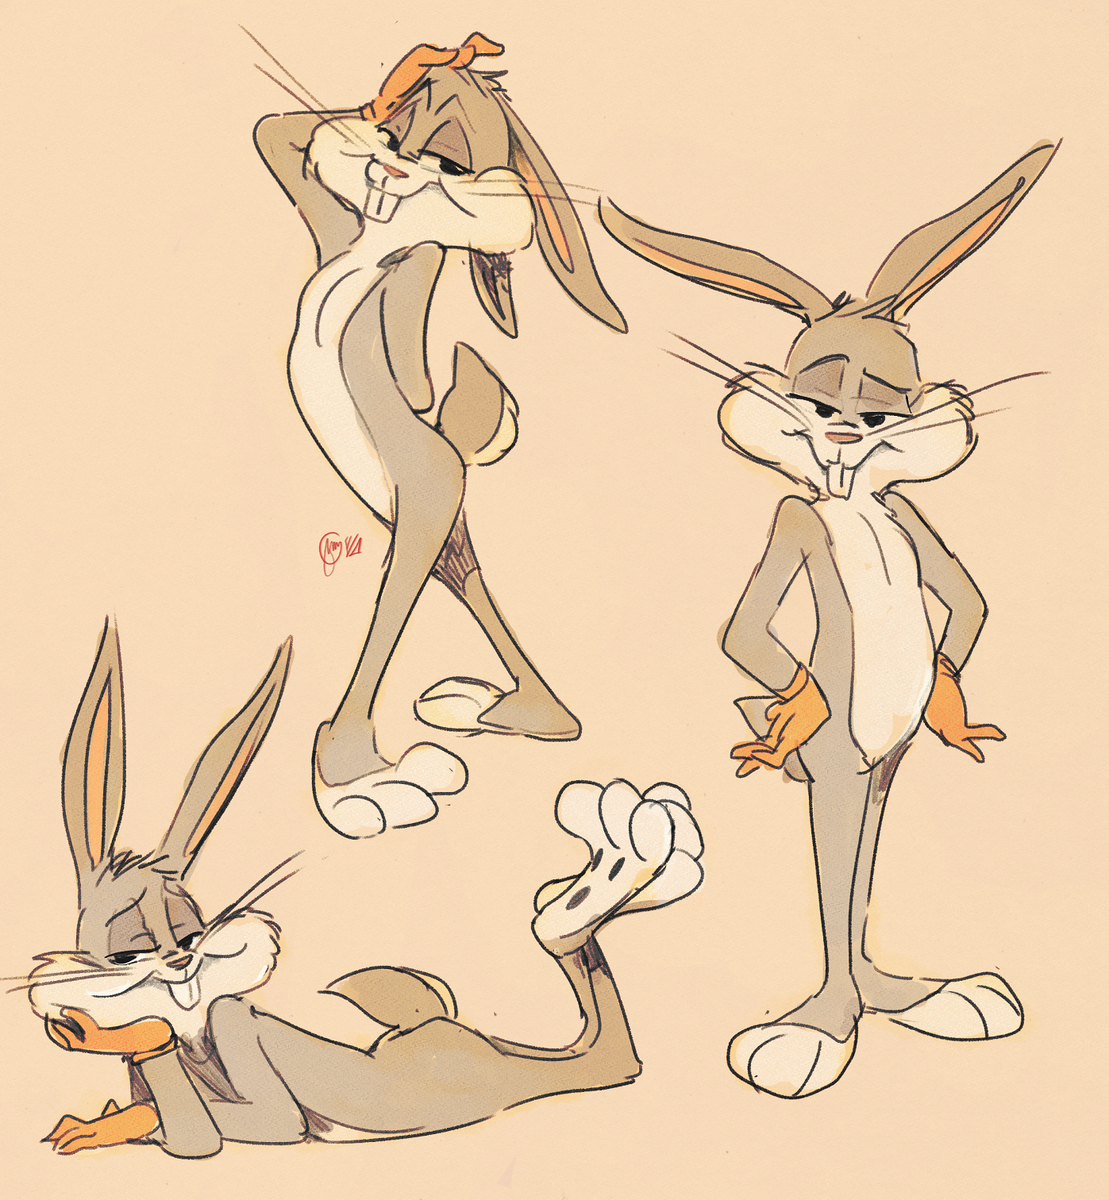 Looney tunes x x ray. Багз заяц заяц Банни. Багз Банни грязный заяц. Эволюция Багза Банни. Батс Банни кролик.